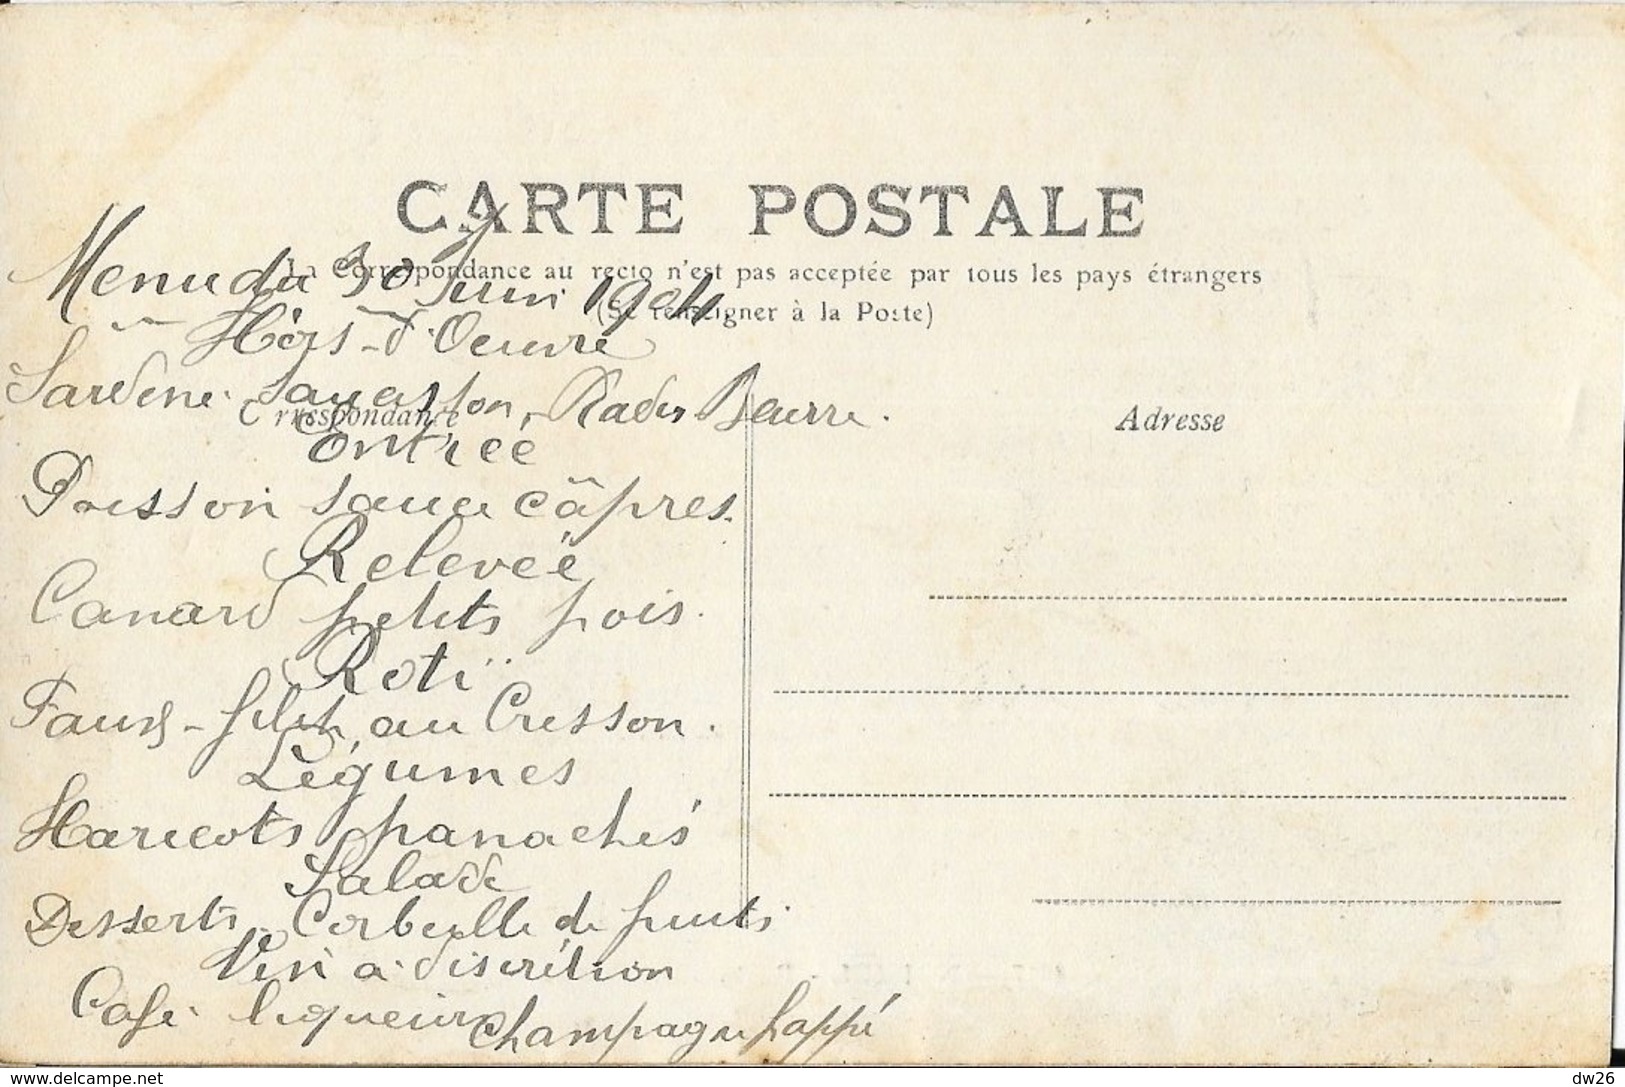 Noisiel (Seine-et-Marne) - Restaurant Denni - Collection R.F. - Phototypie A. Rep & Fillette - Carte N° 4617 - Restaurants